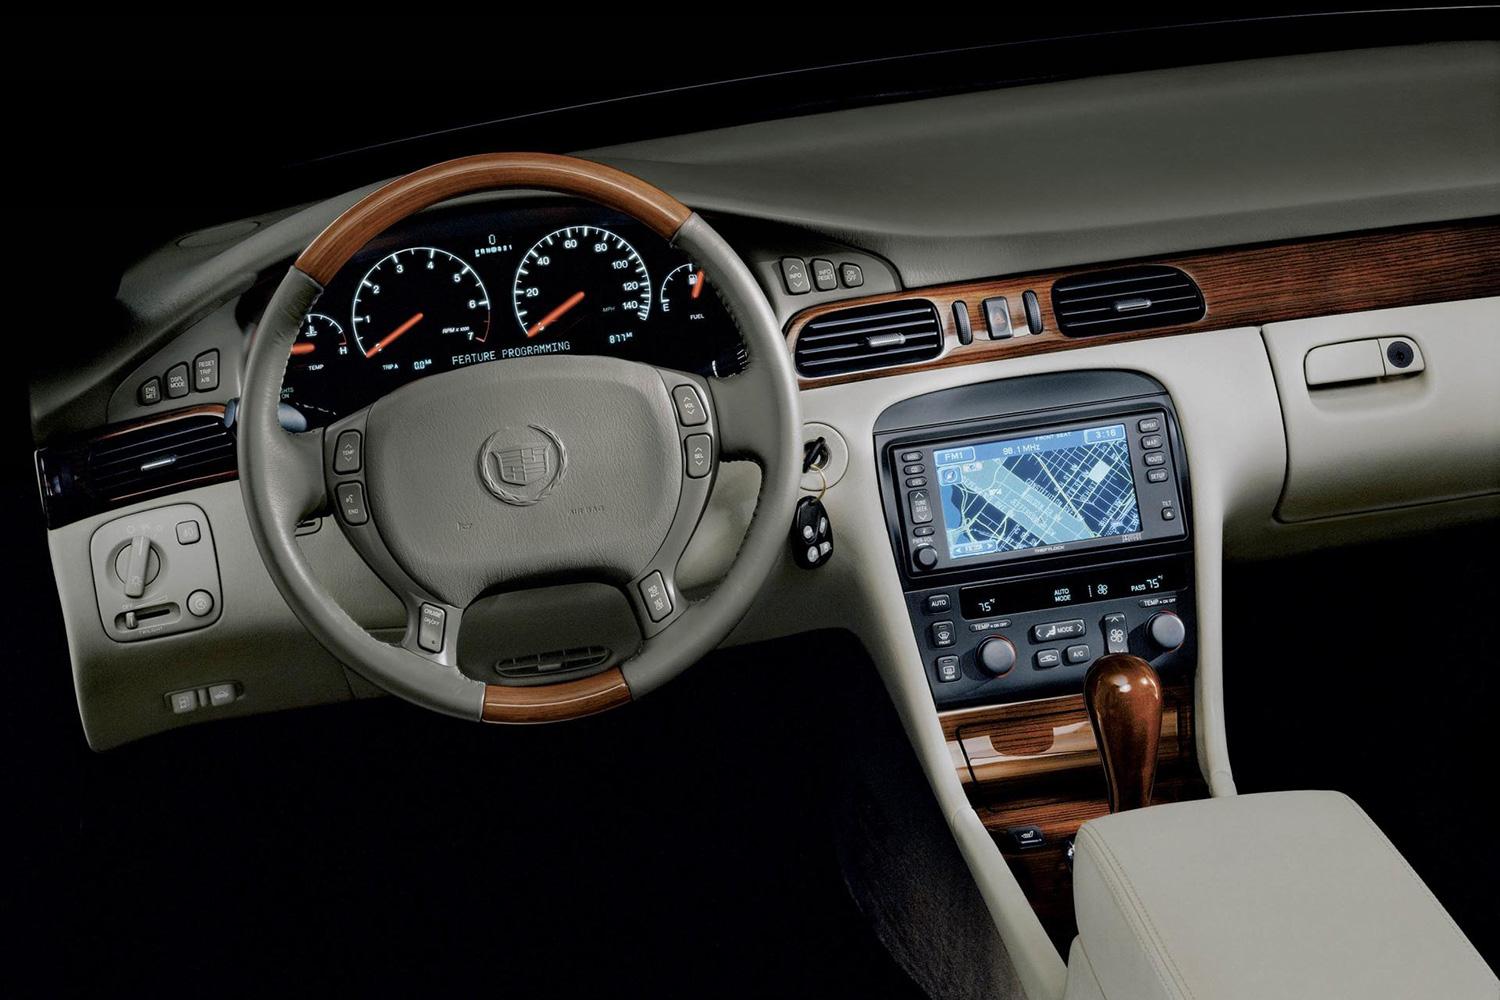 2004 Cadillac Seville interior front